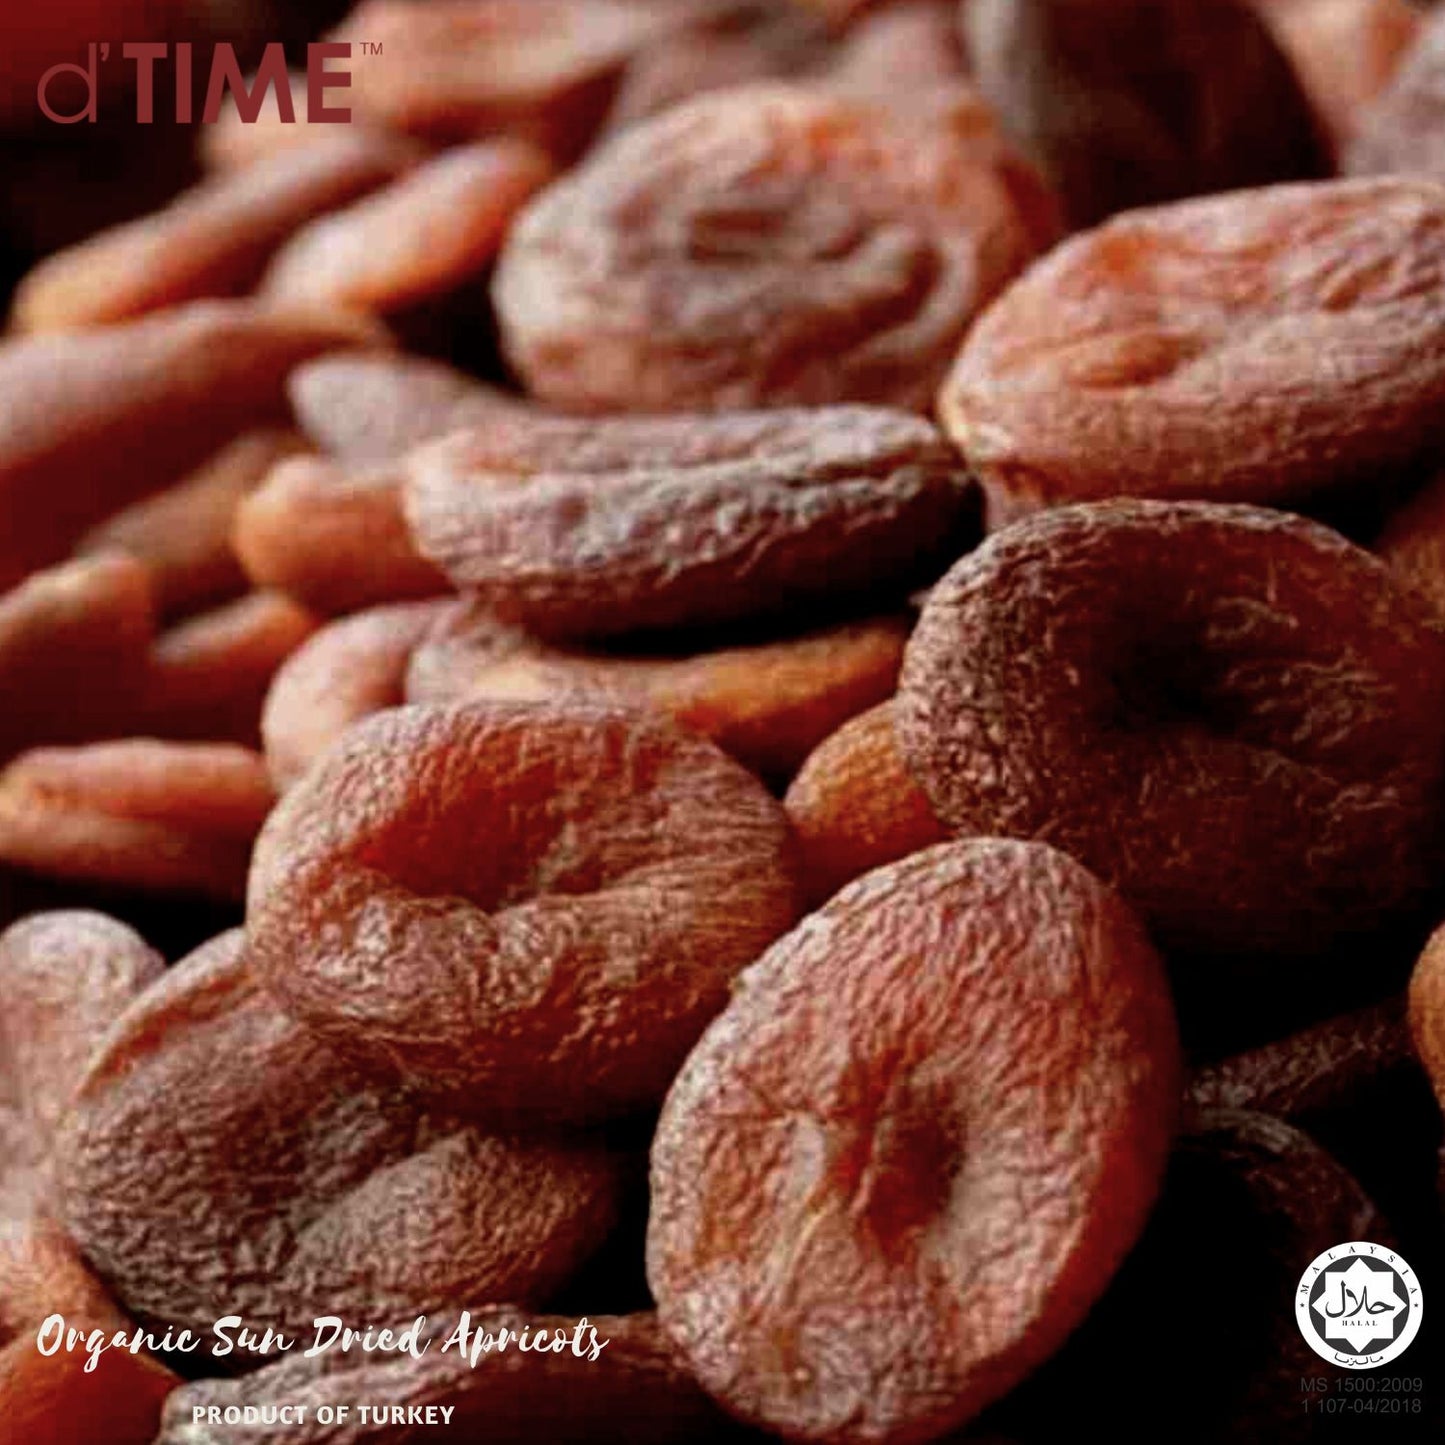 d'TIME Turkey Organic Sundried Apricot, Organic Dried Fruit, Apricot, Vegan || 1kg